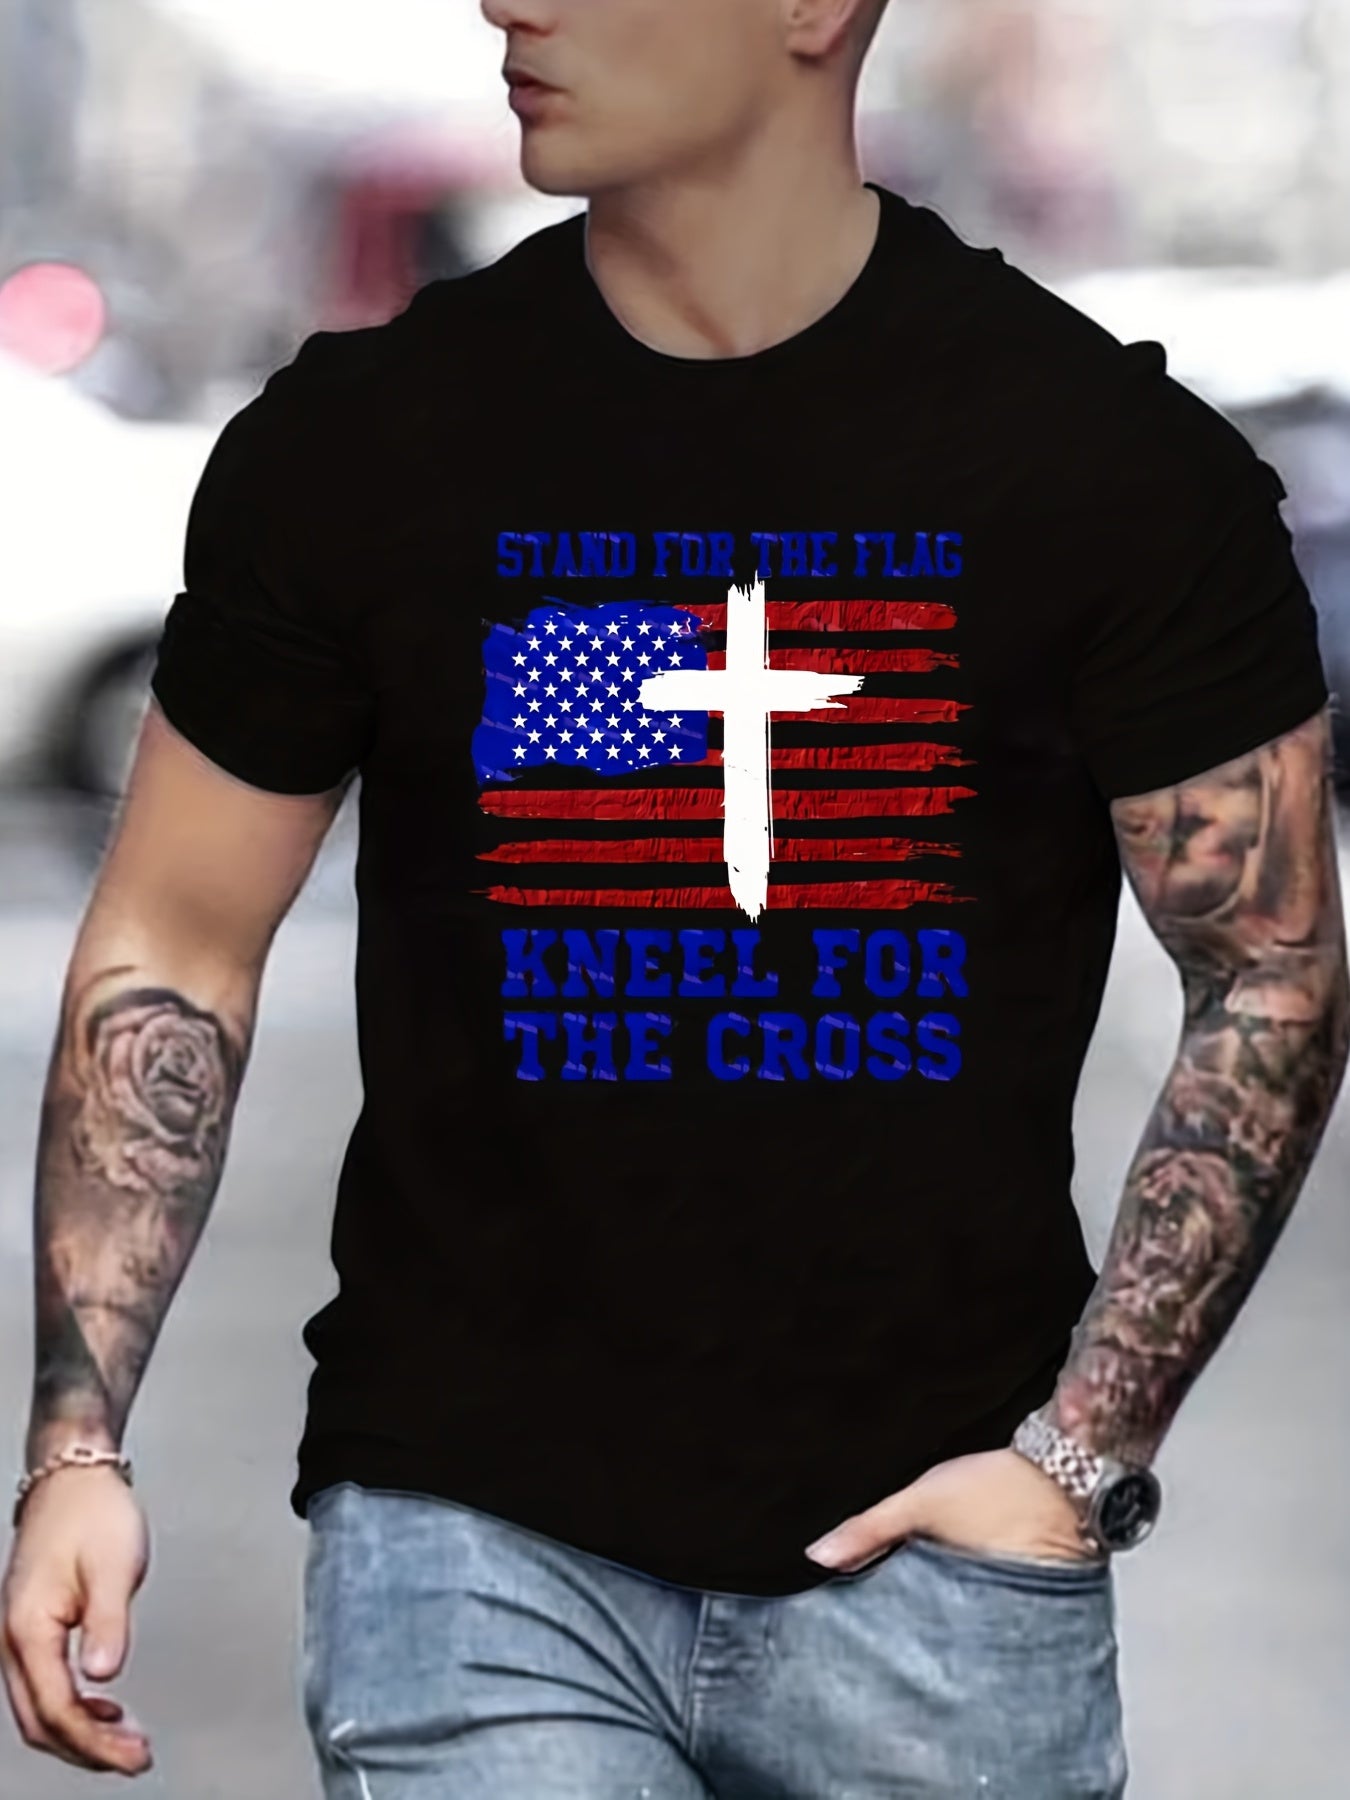 Stand For The Flag Kneel For The Cross Patriotic American Flag Men's Christian T-shirt claimedbygoddesigns